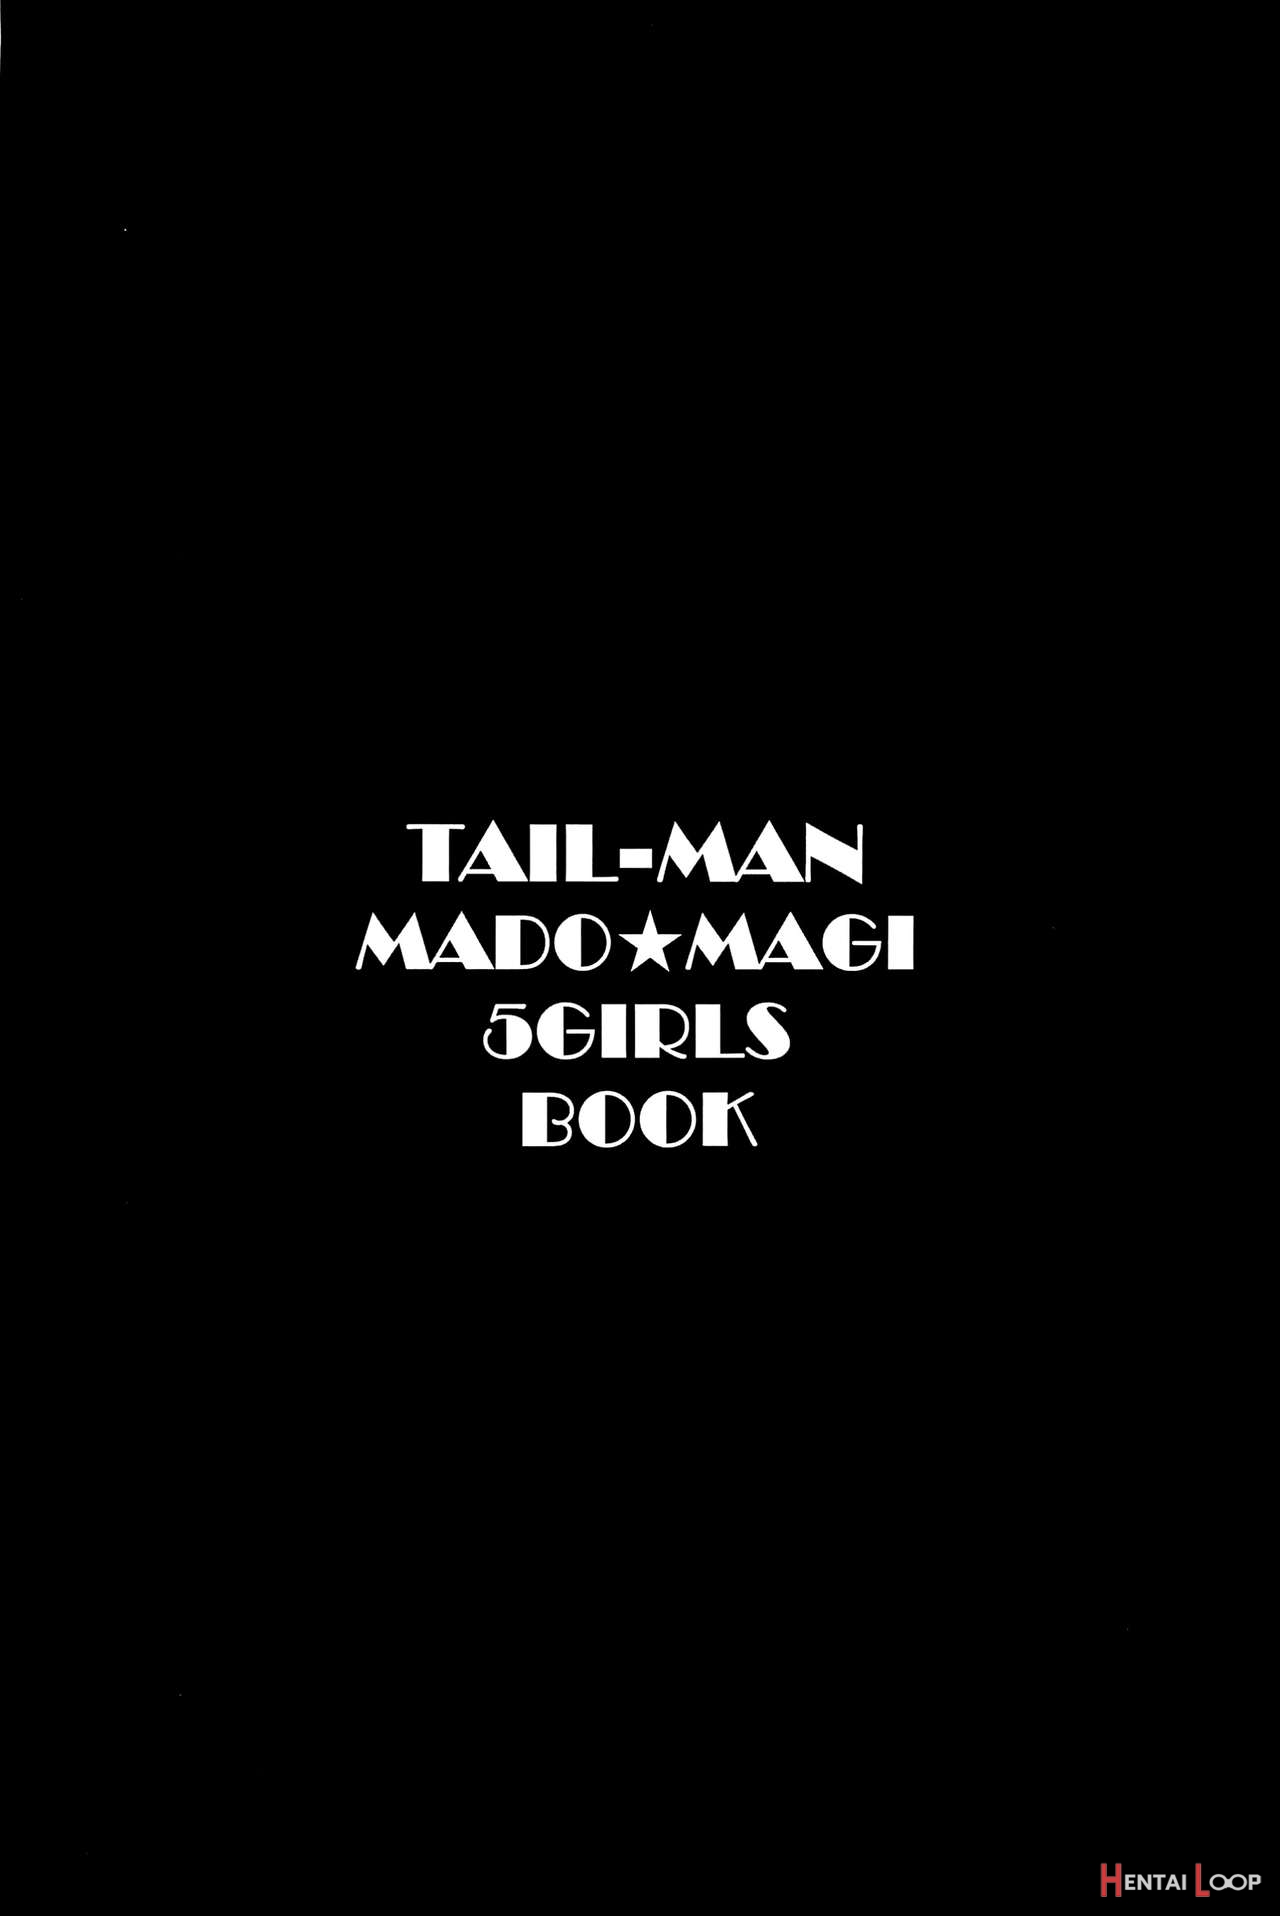 Tail-man Mado★magi 5girls Book page 2